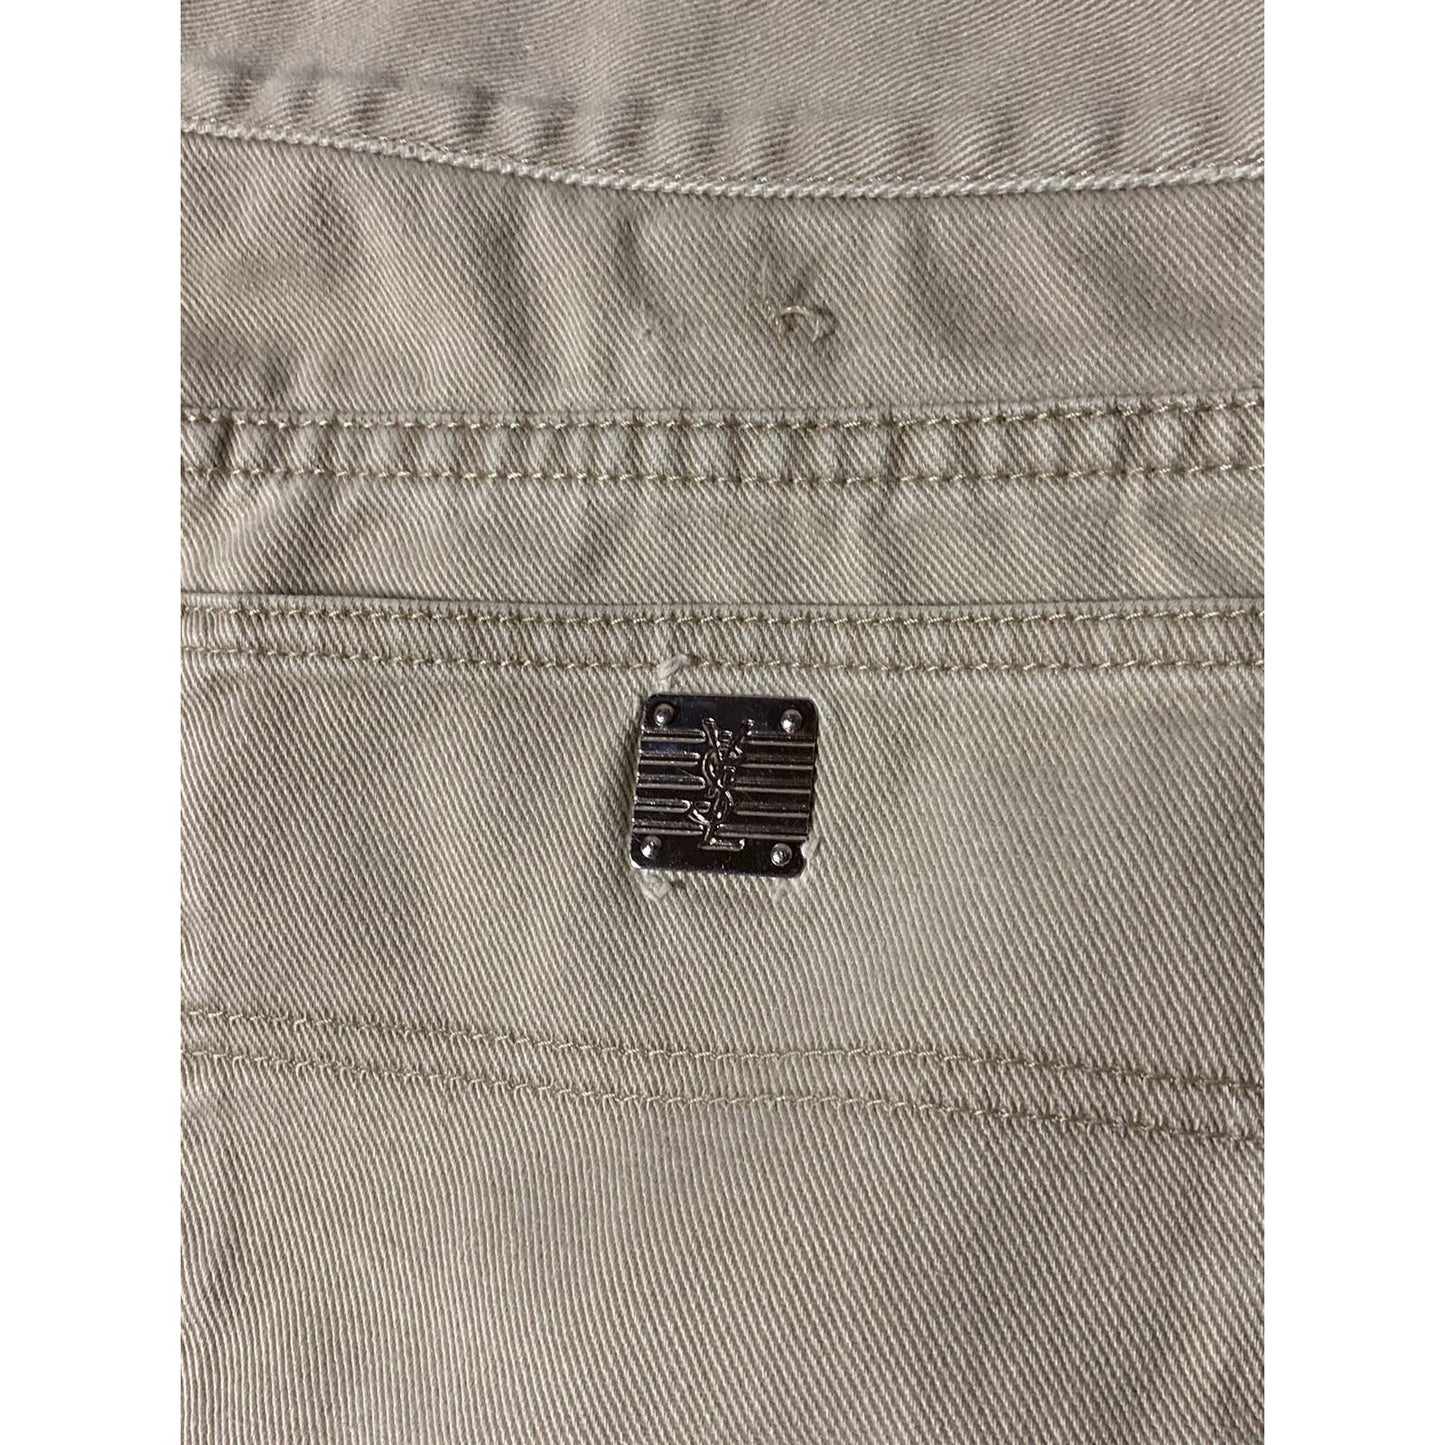 90s Yves Saint Laurent vintage YSL beige jeans small logo